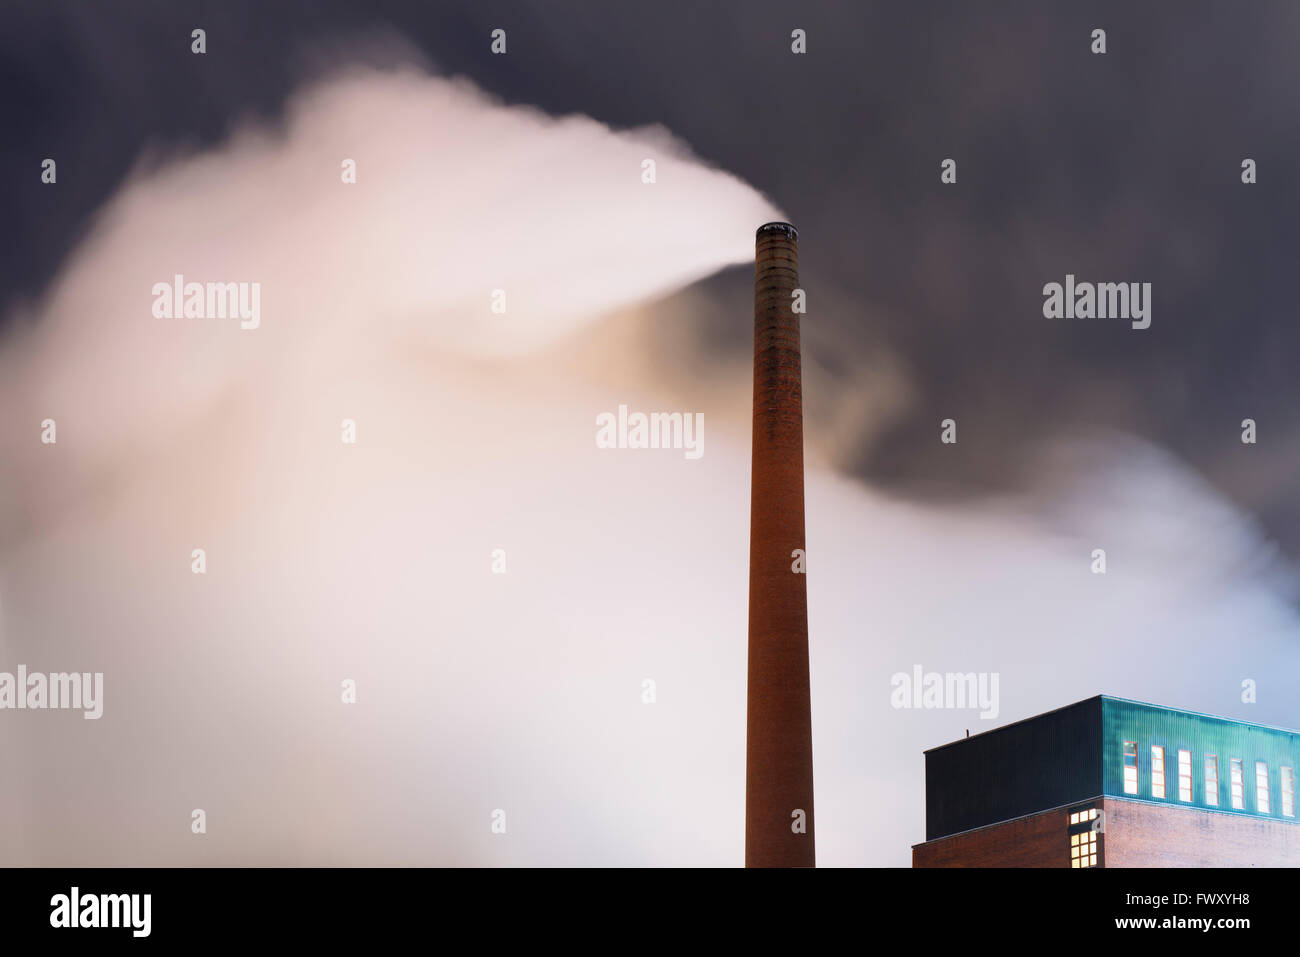 Finland, Pirkanmaa, Smoke coming out of smoke stack at night Stock Photo